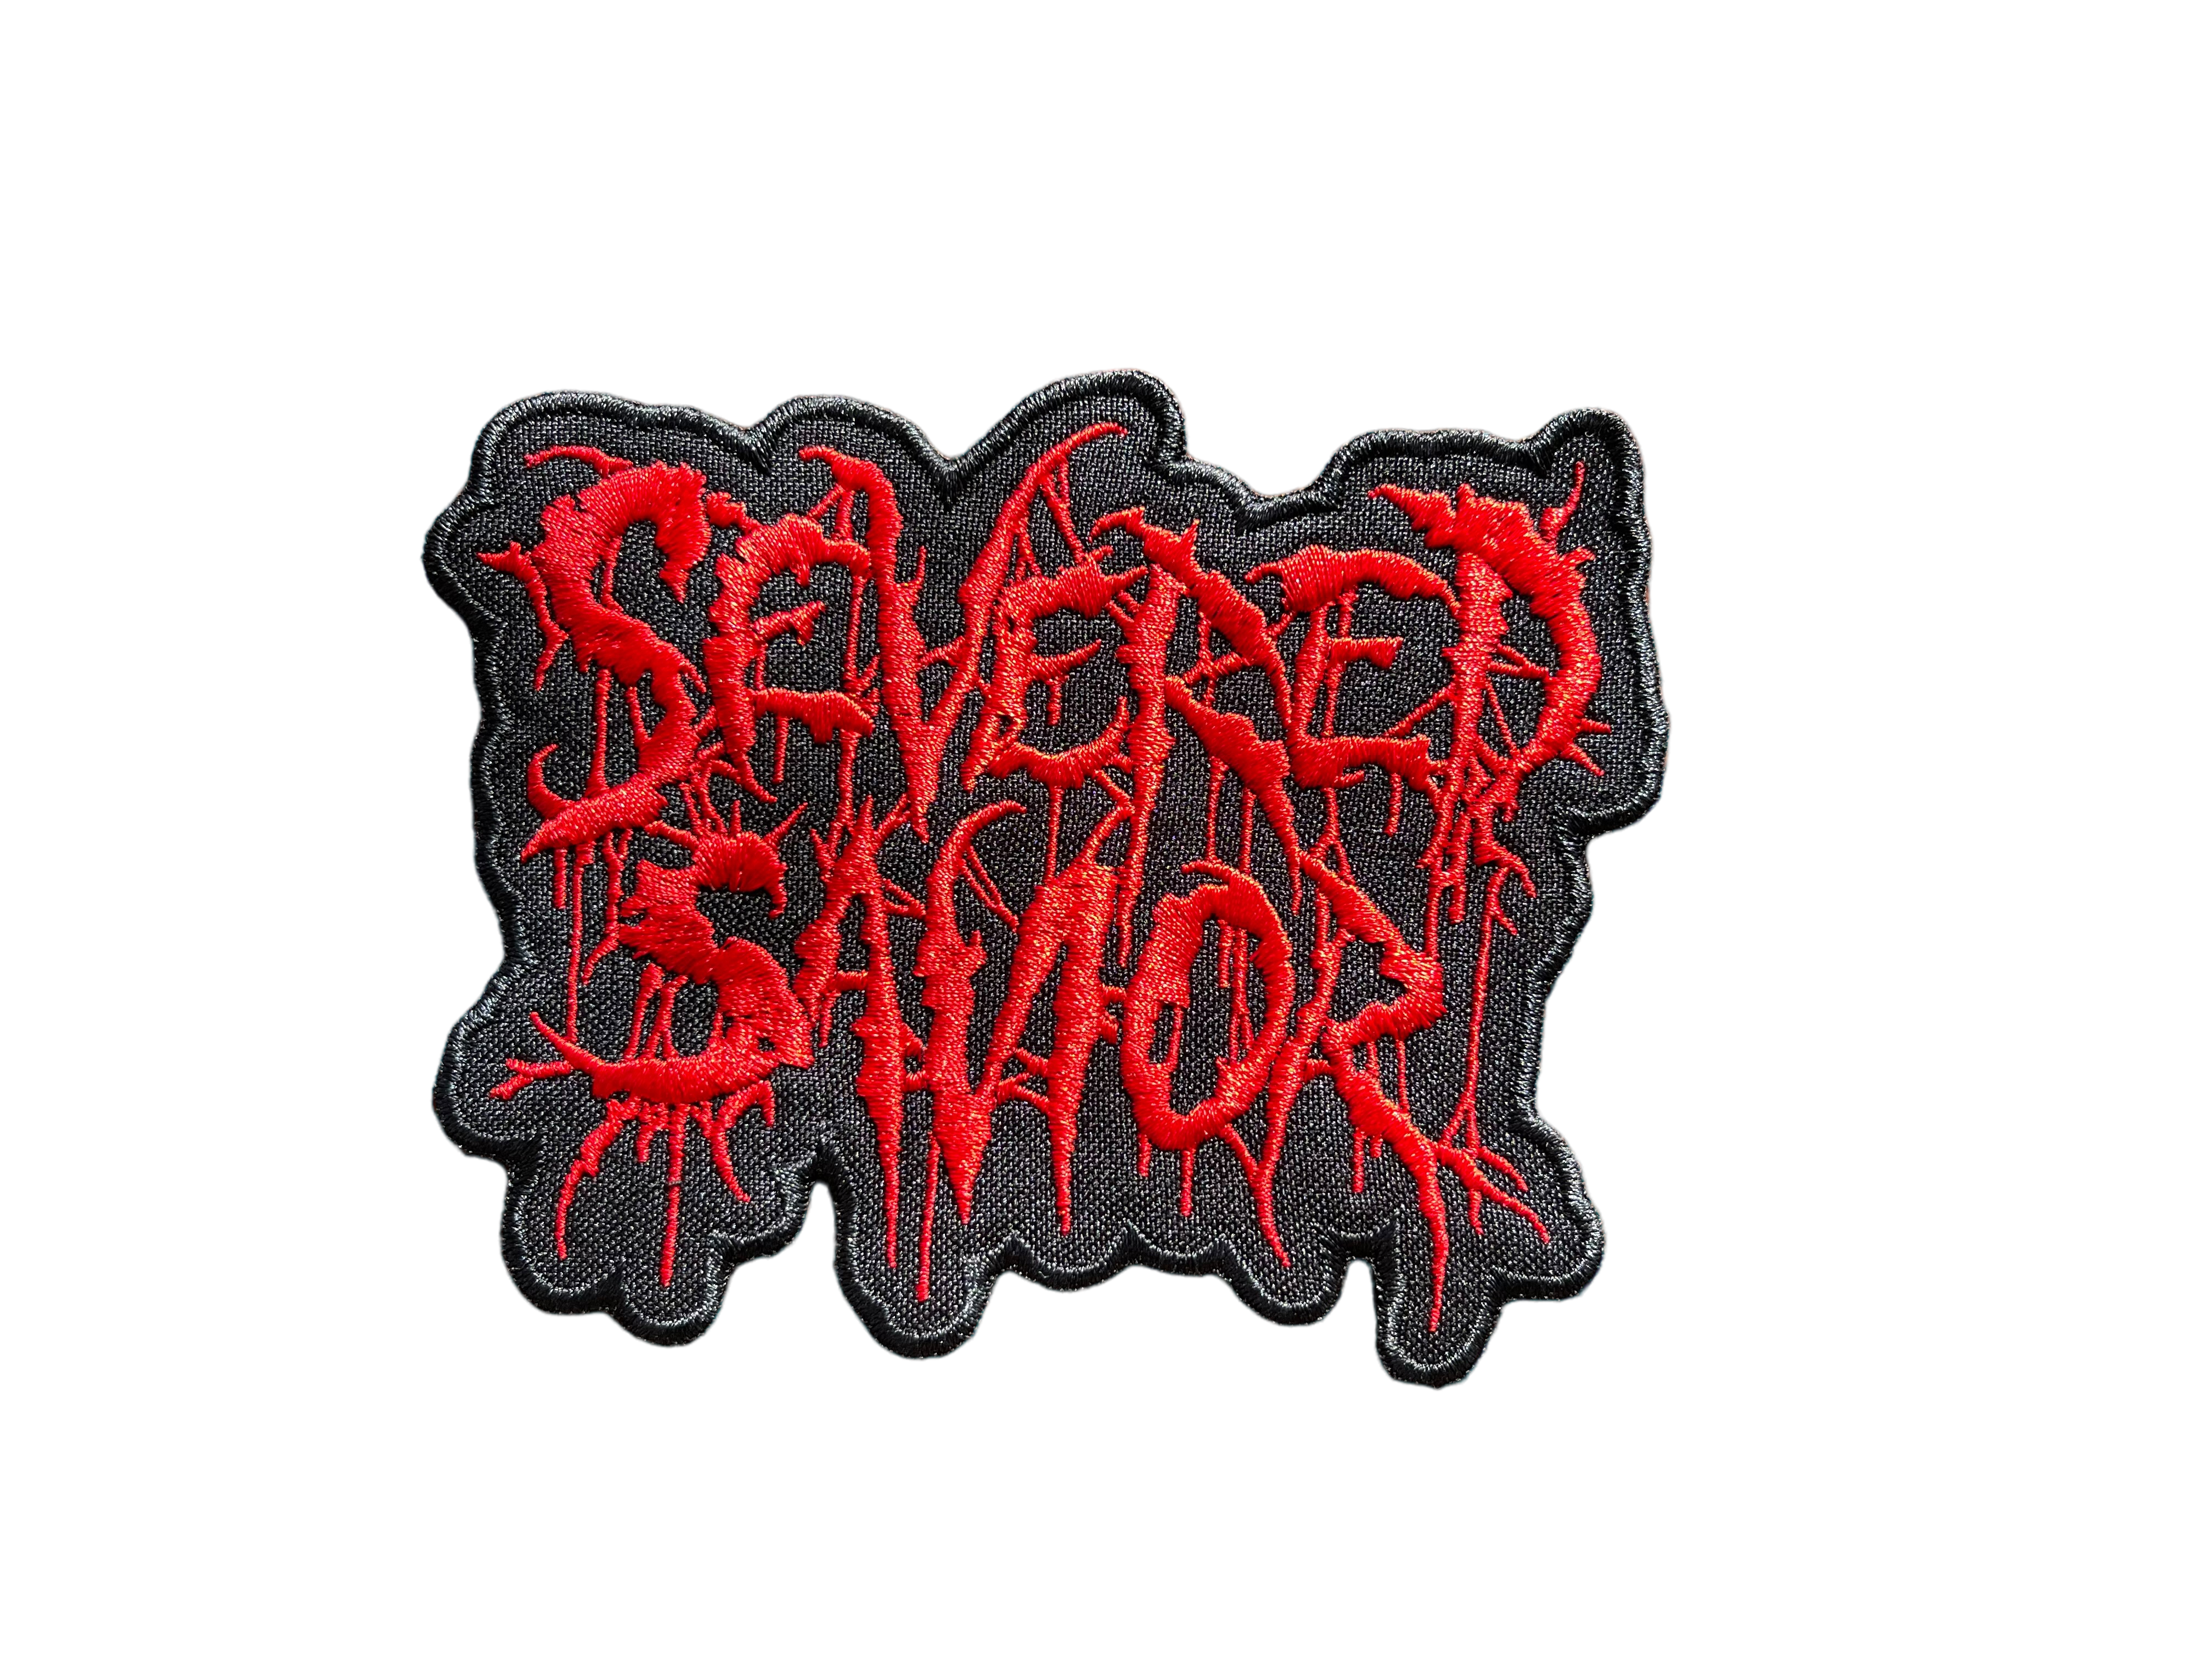 Severed Savior Logo Patch - Red